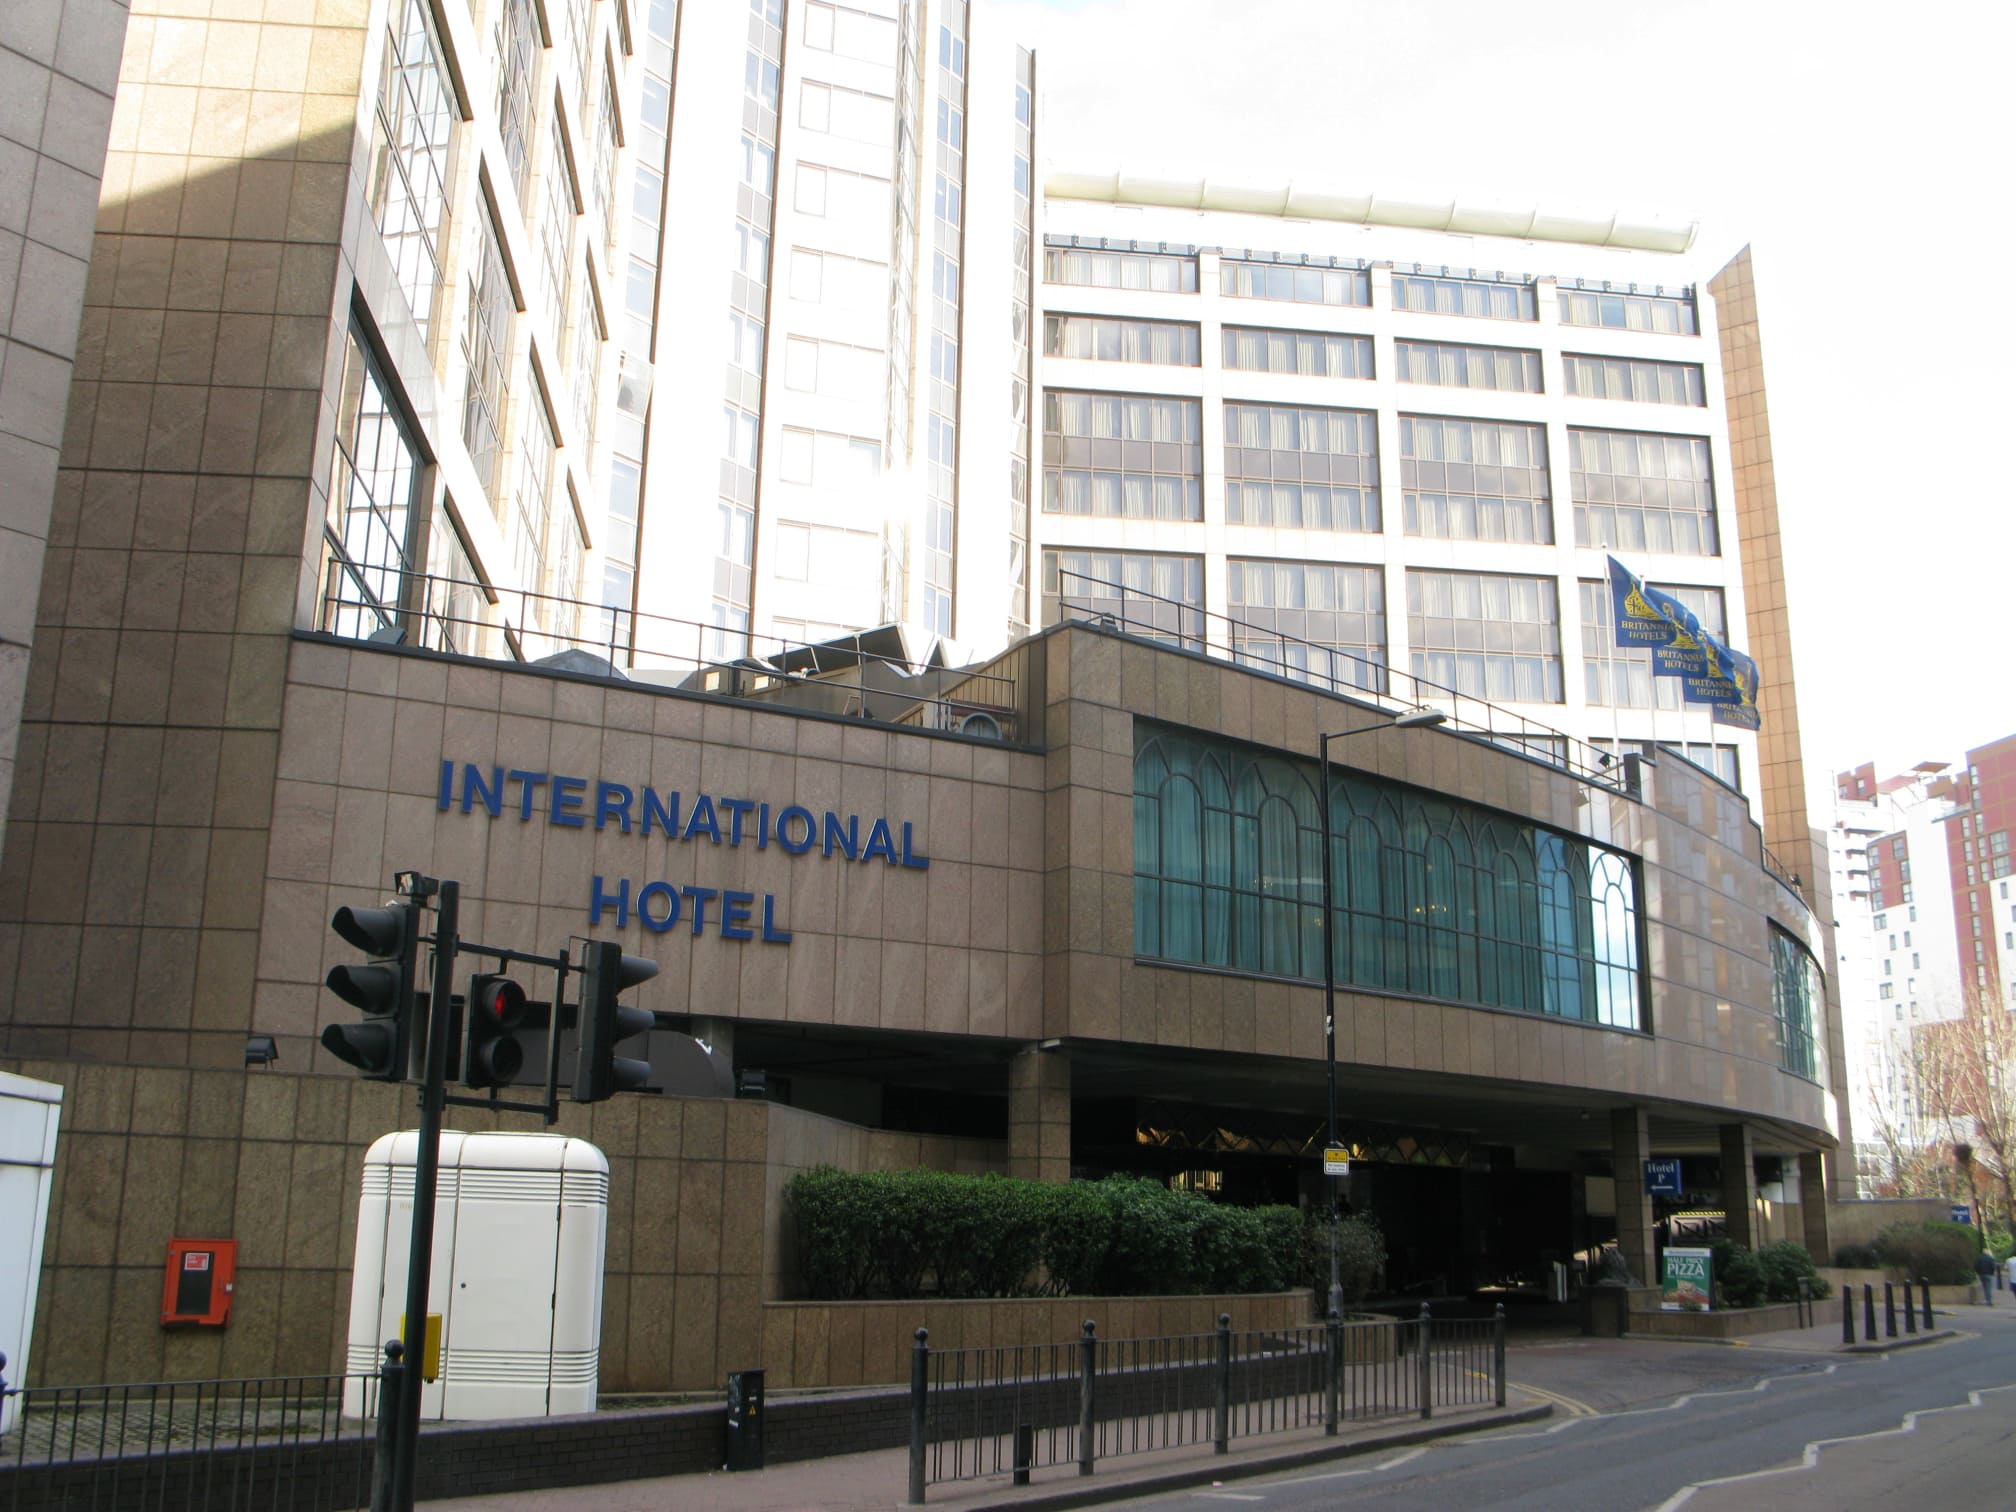 Spice - Britannia International Hotel | Britannia International Hotel, 163 Marsh Wall, London E14 9SJ | +44 20 7712 0100